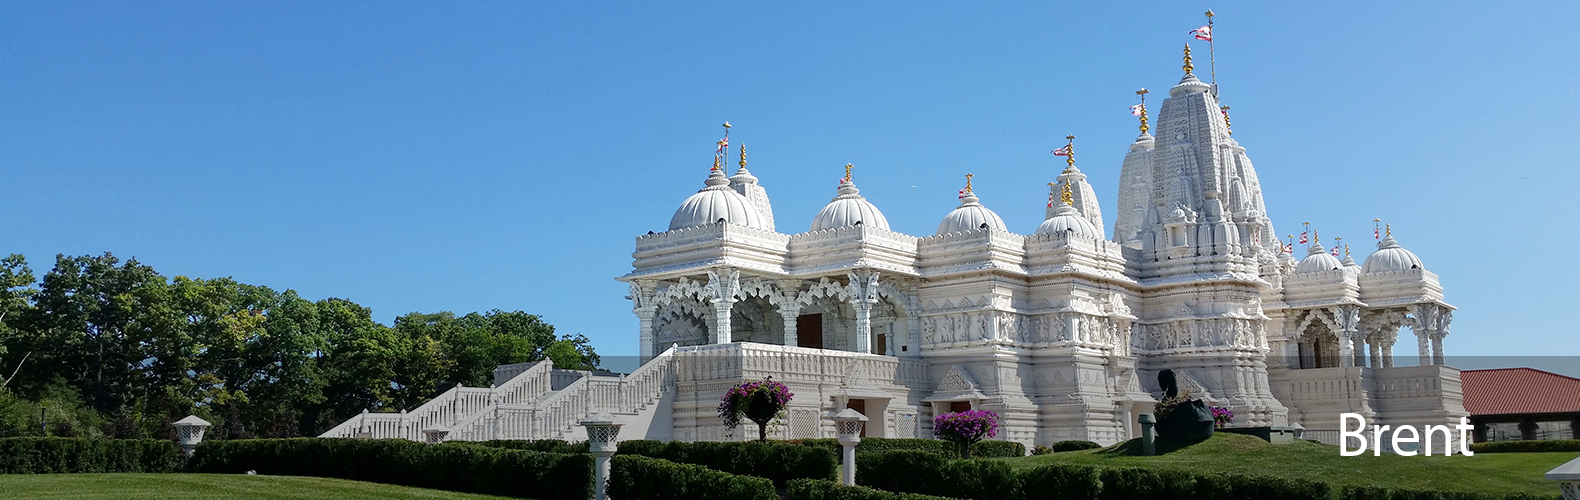 London Borough of Brent Neaseden Hindu Temple